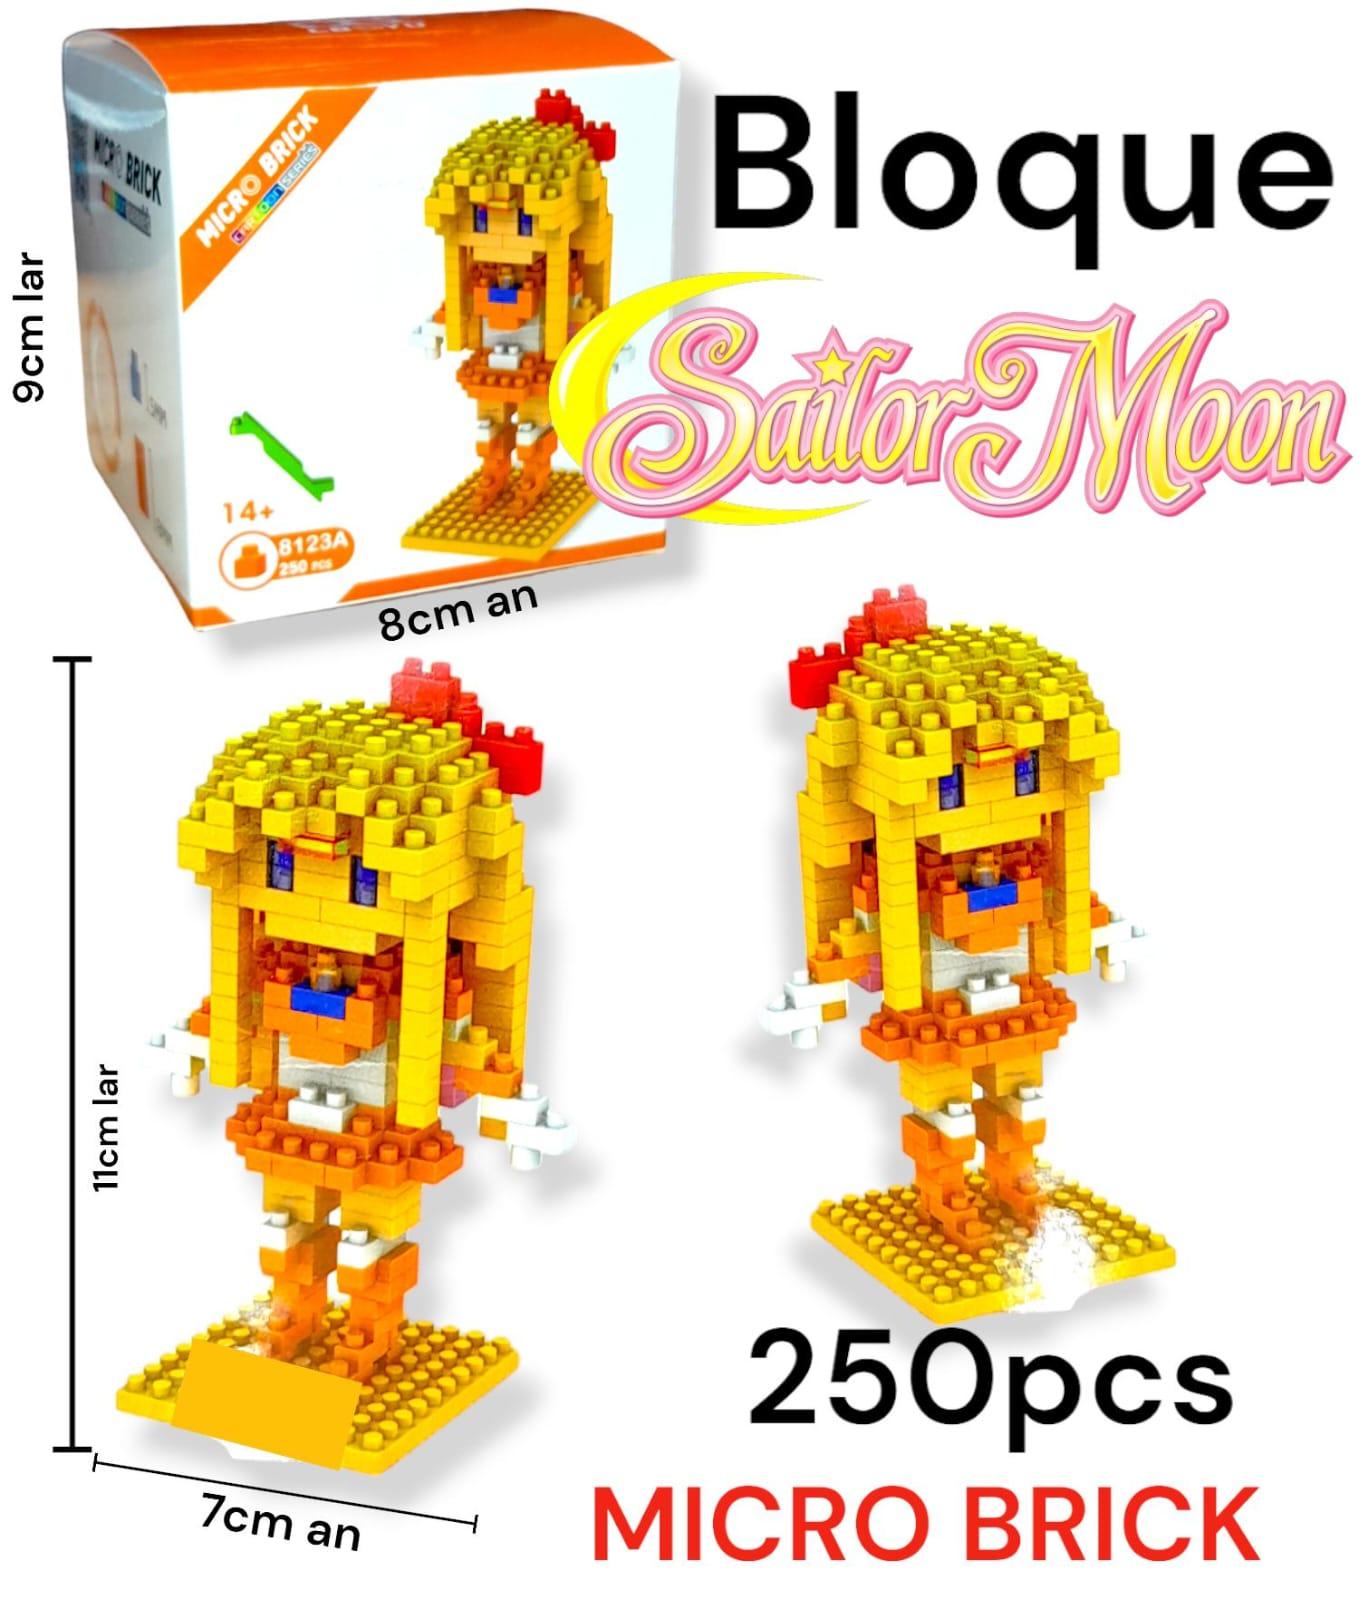 Bloque SAILOR MOON Micro Brick